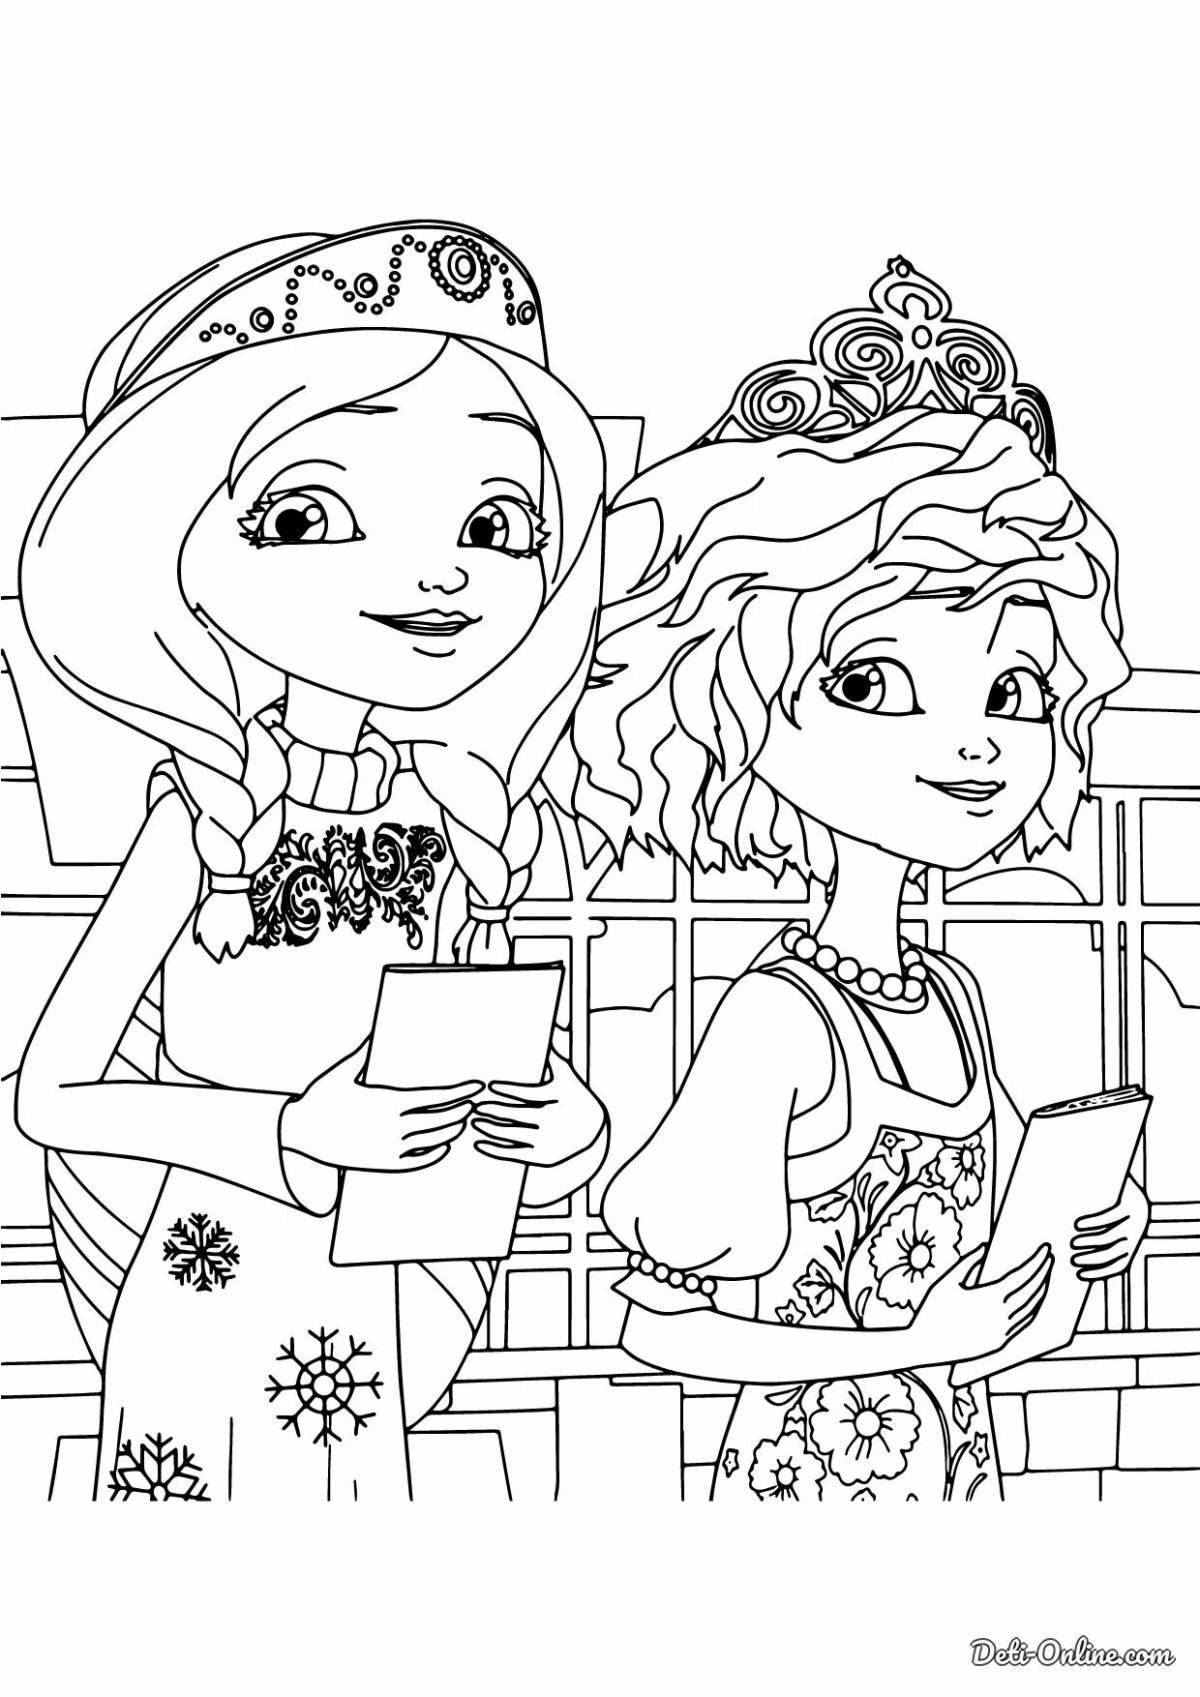 Impressive cartoon princess coloring book